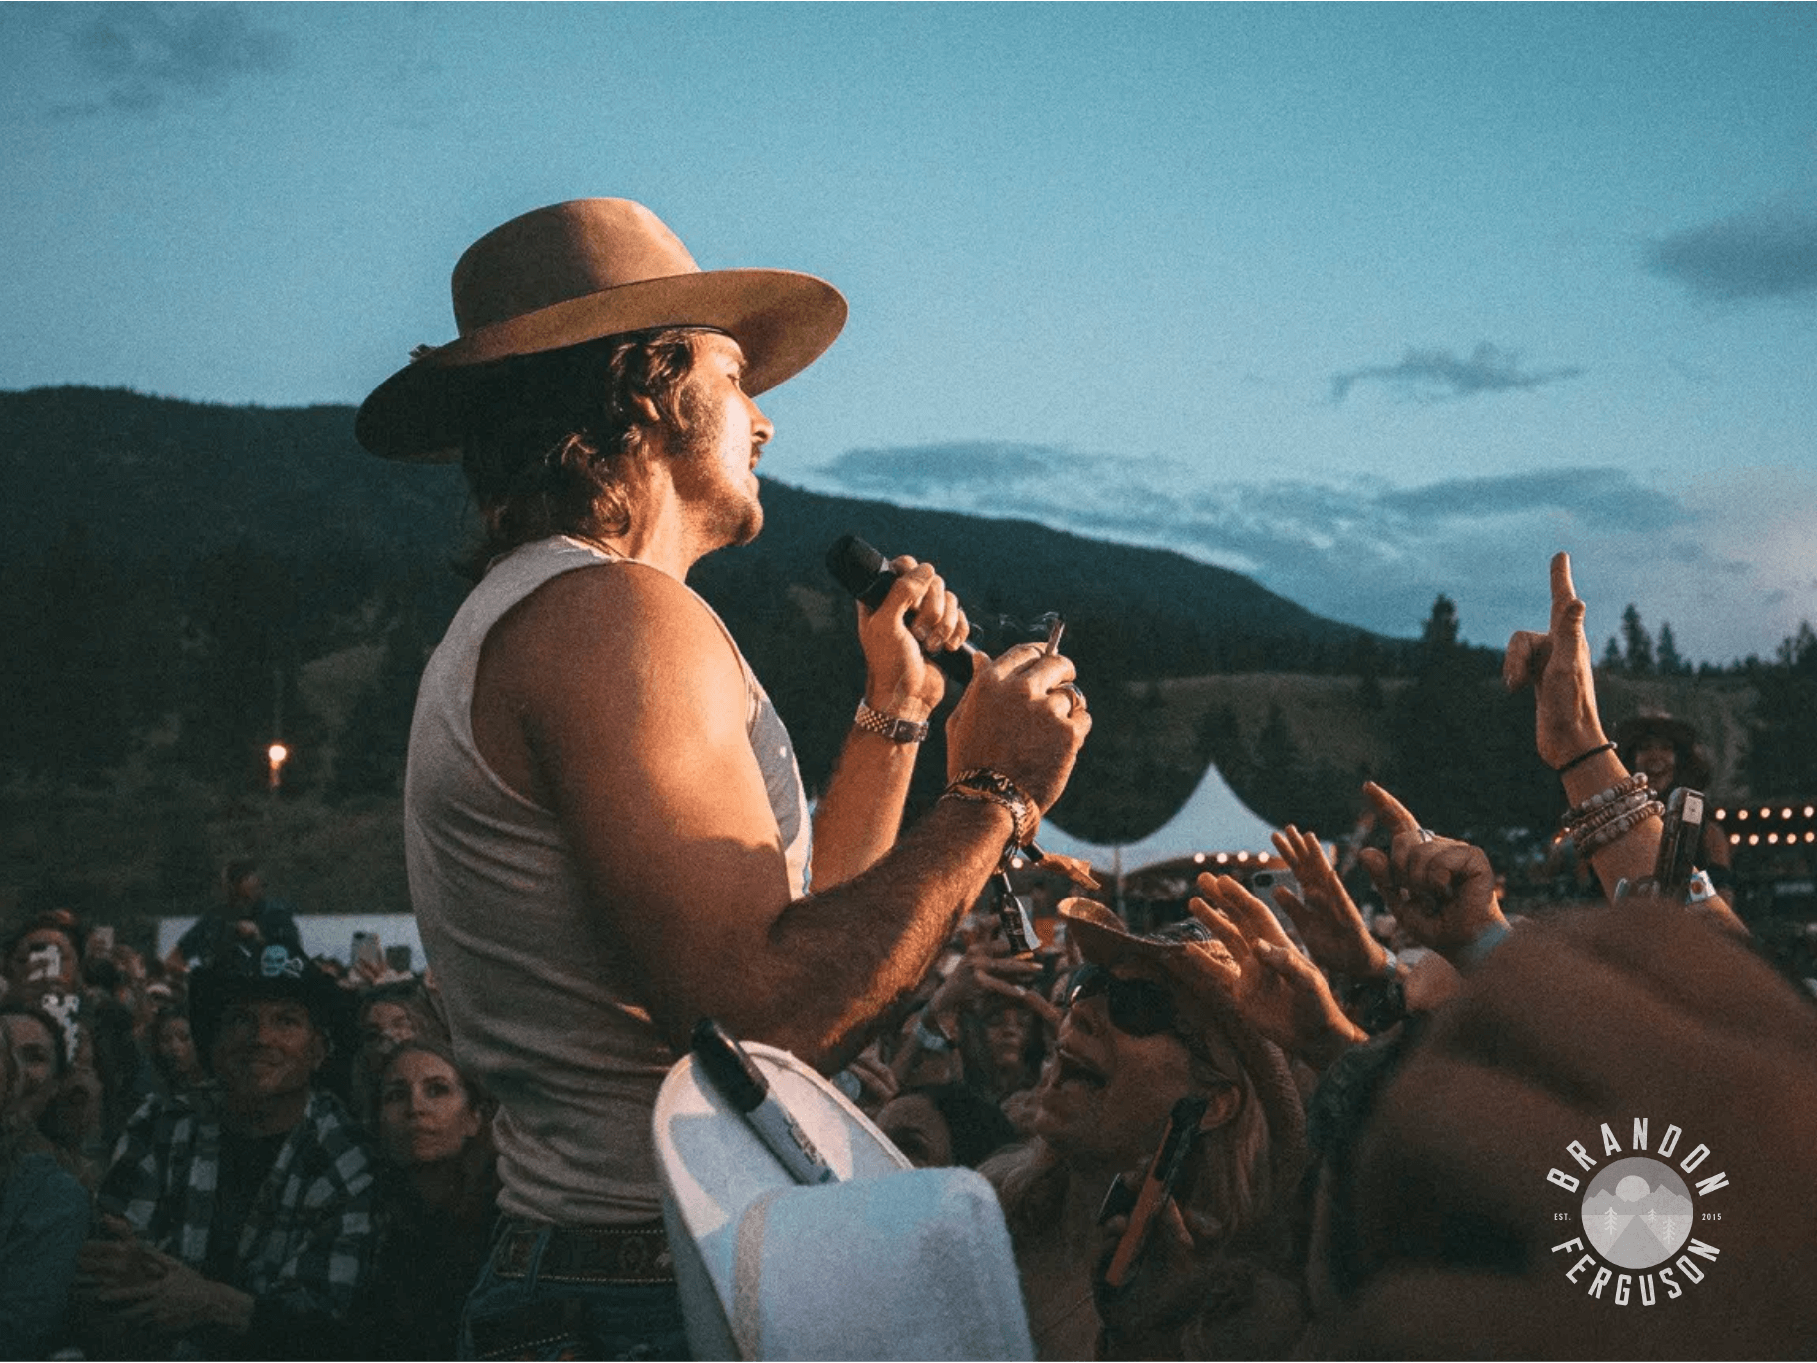 Country musician on stage, taken by Brandon Ferguson